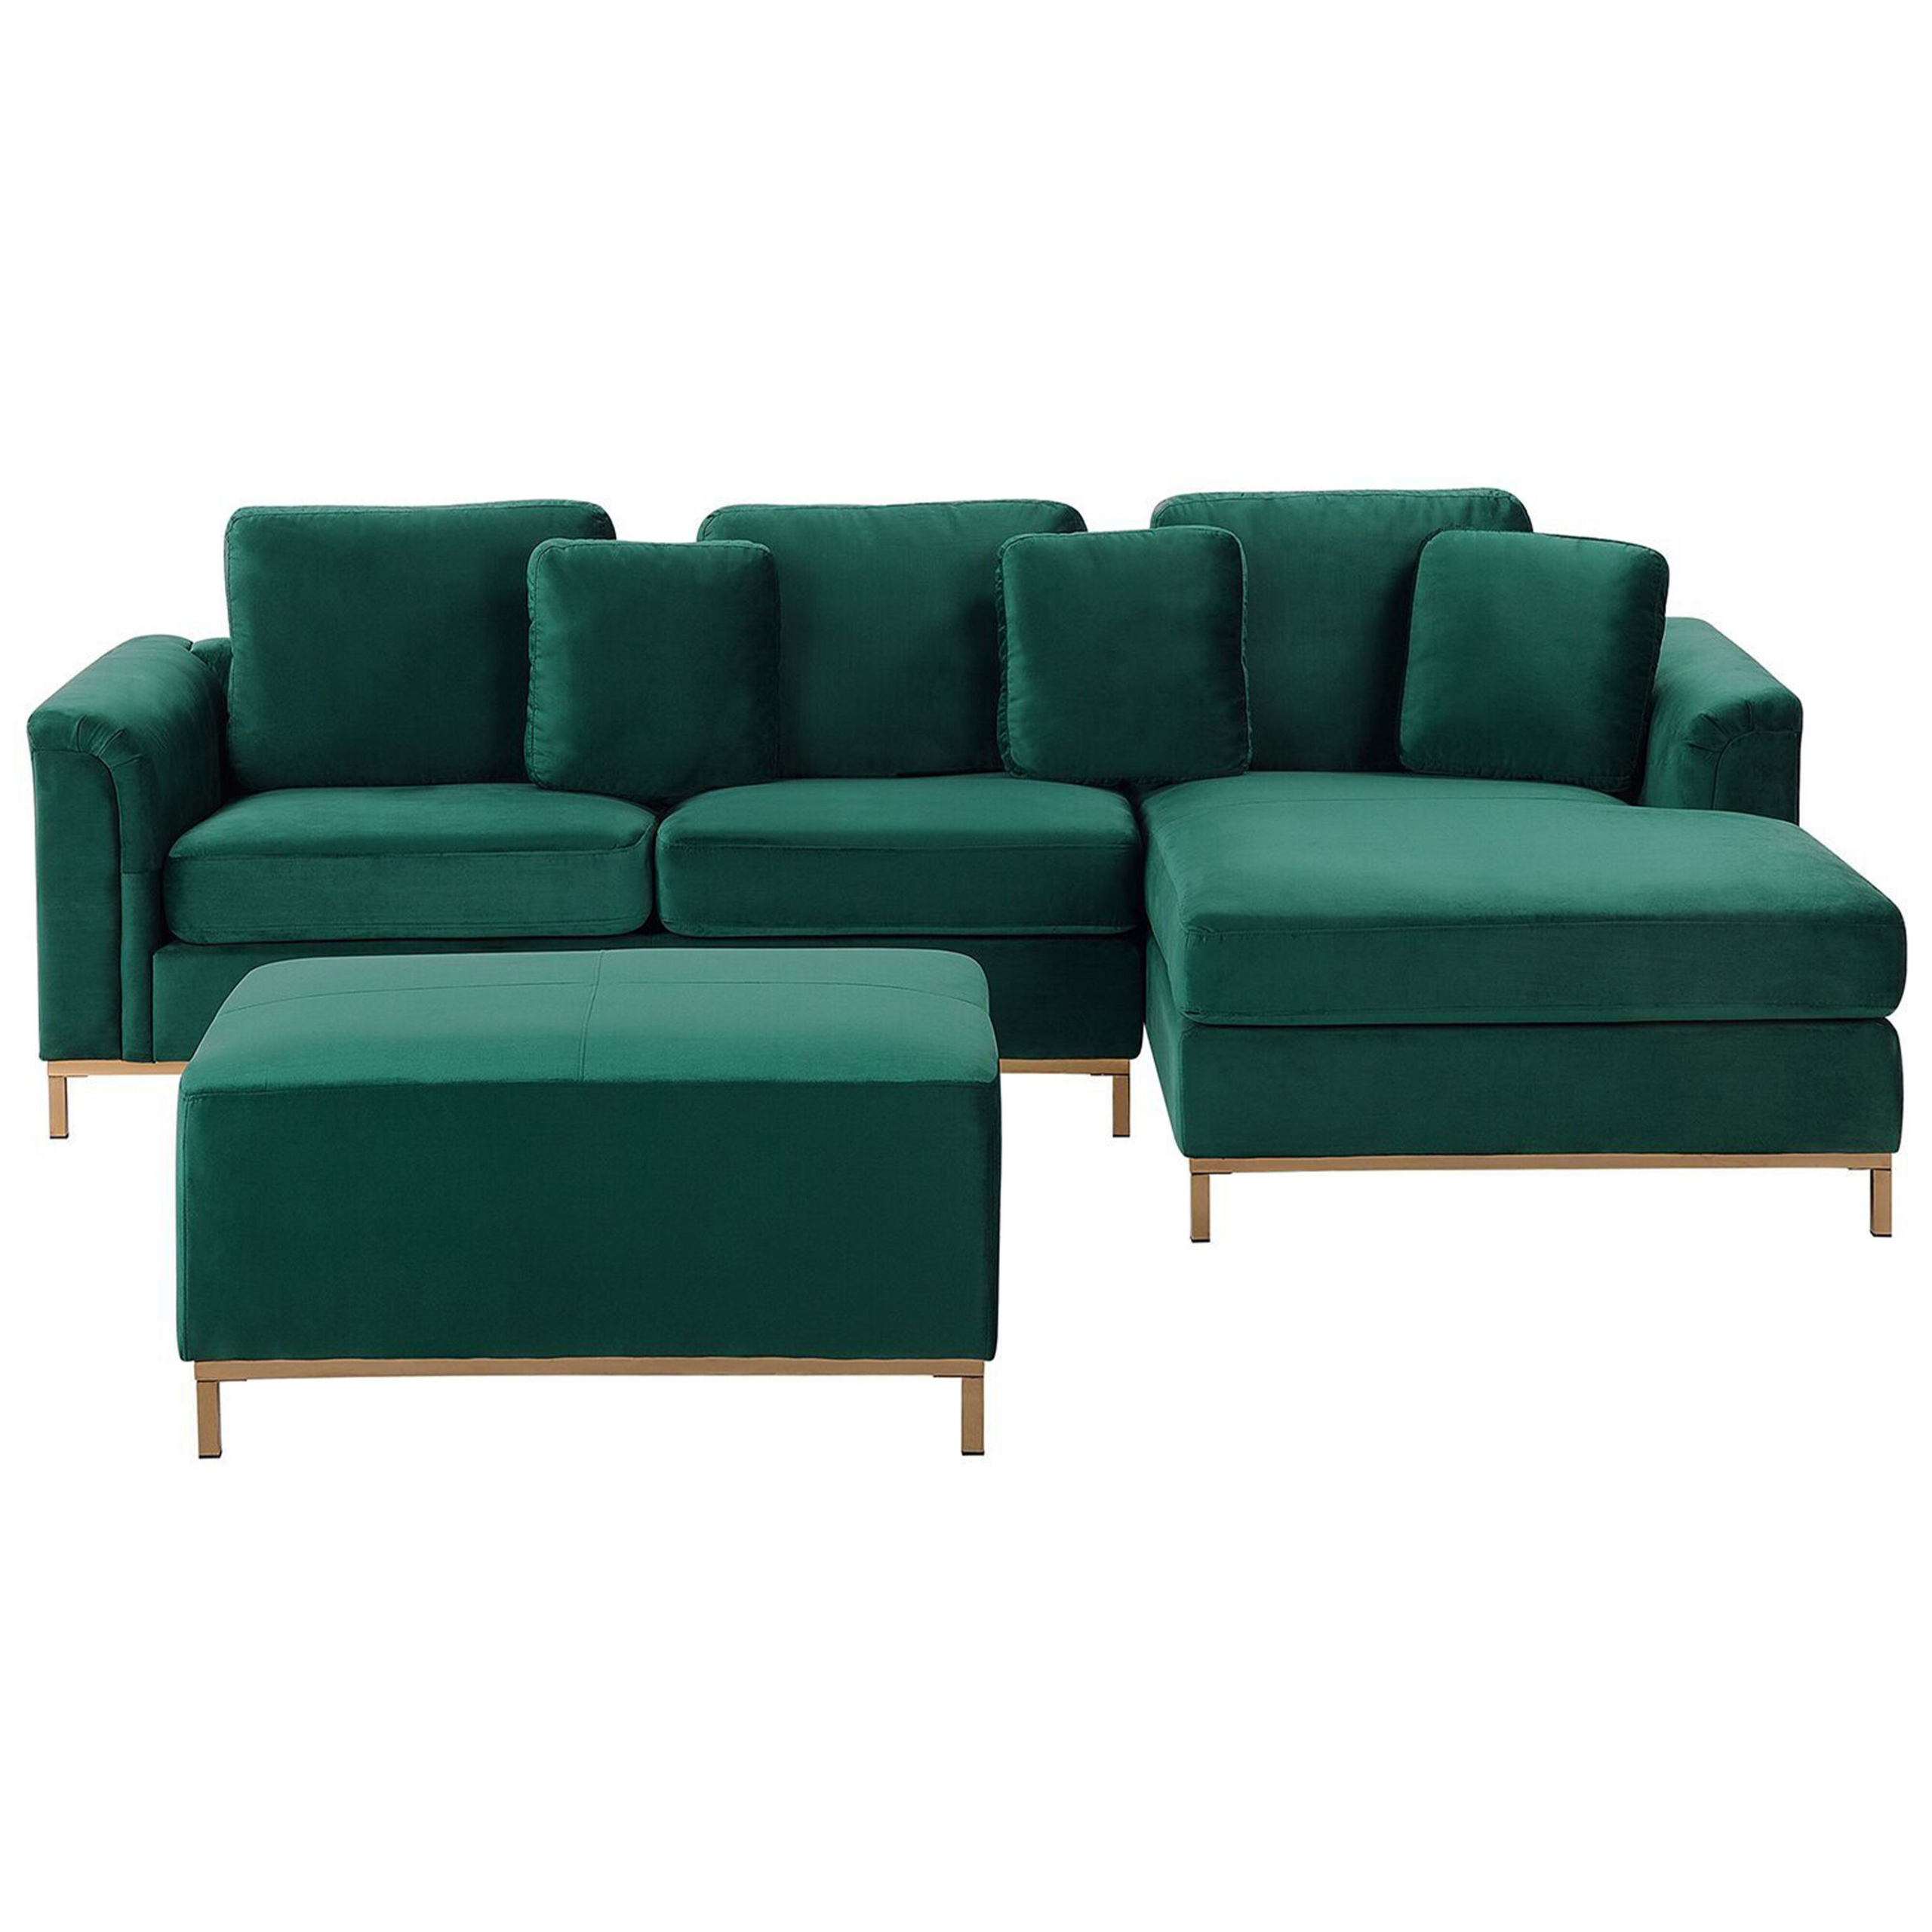 Beliani Corner Sofa Green Velvet Upholstered with Ottoman L-shaped Left Hand Orientation